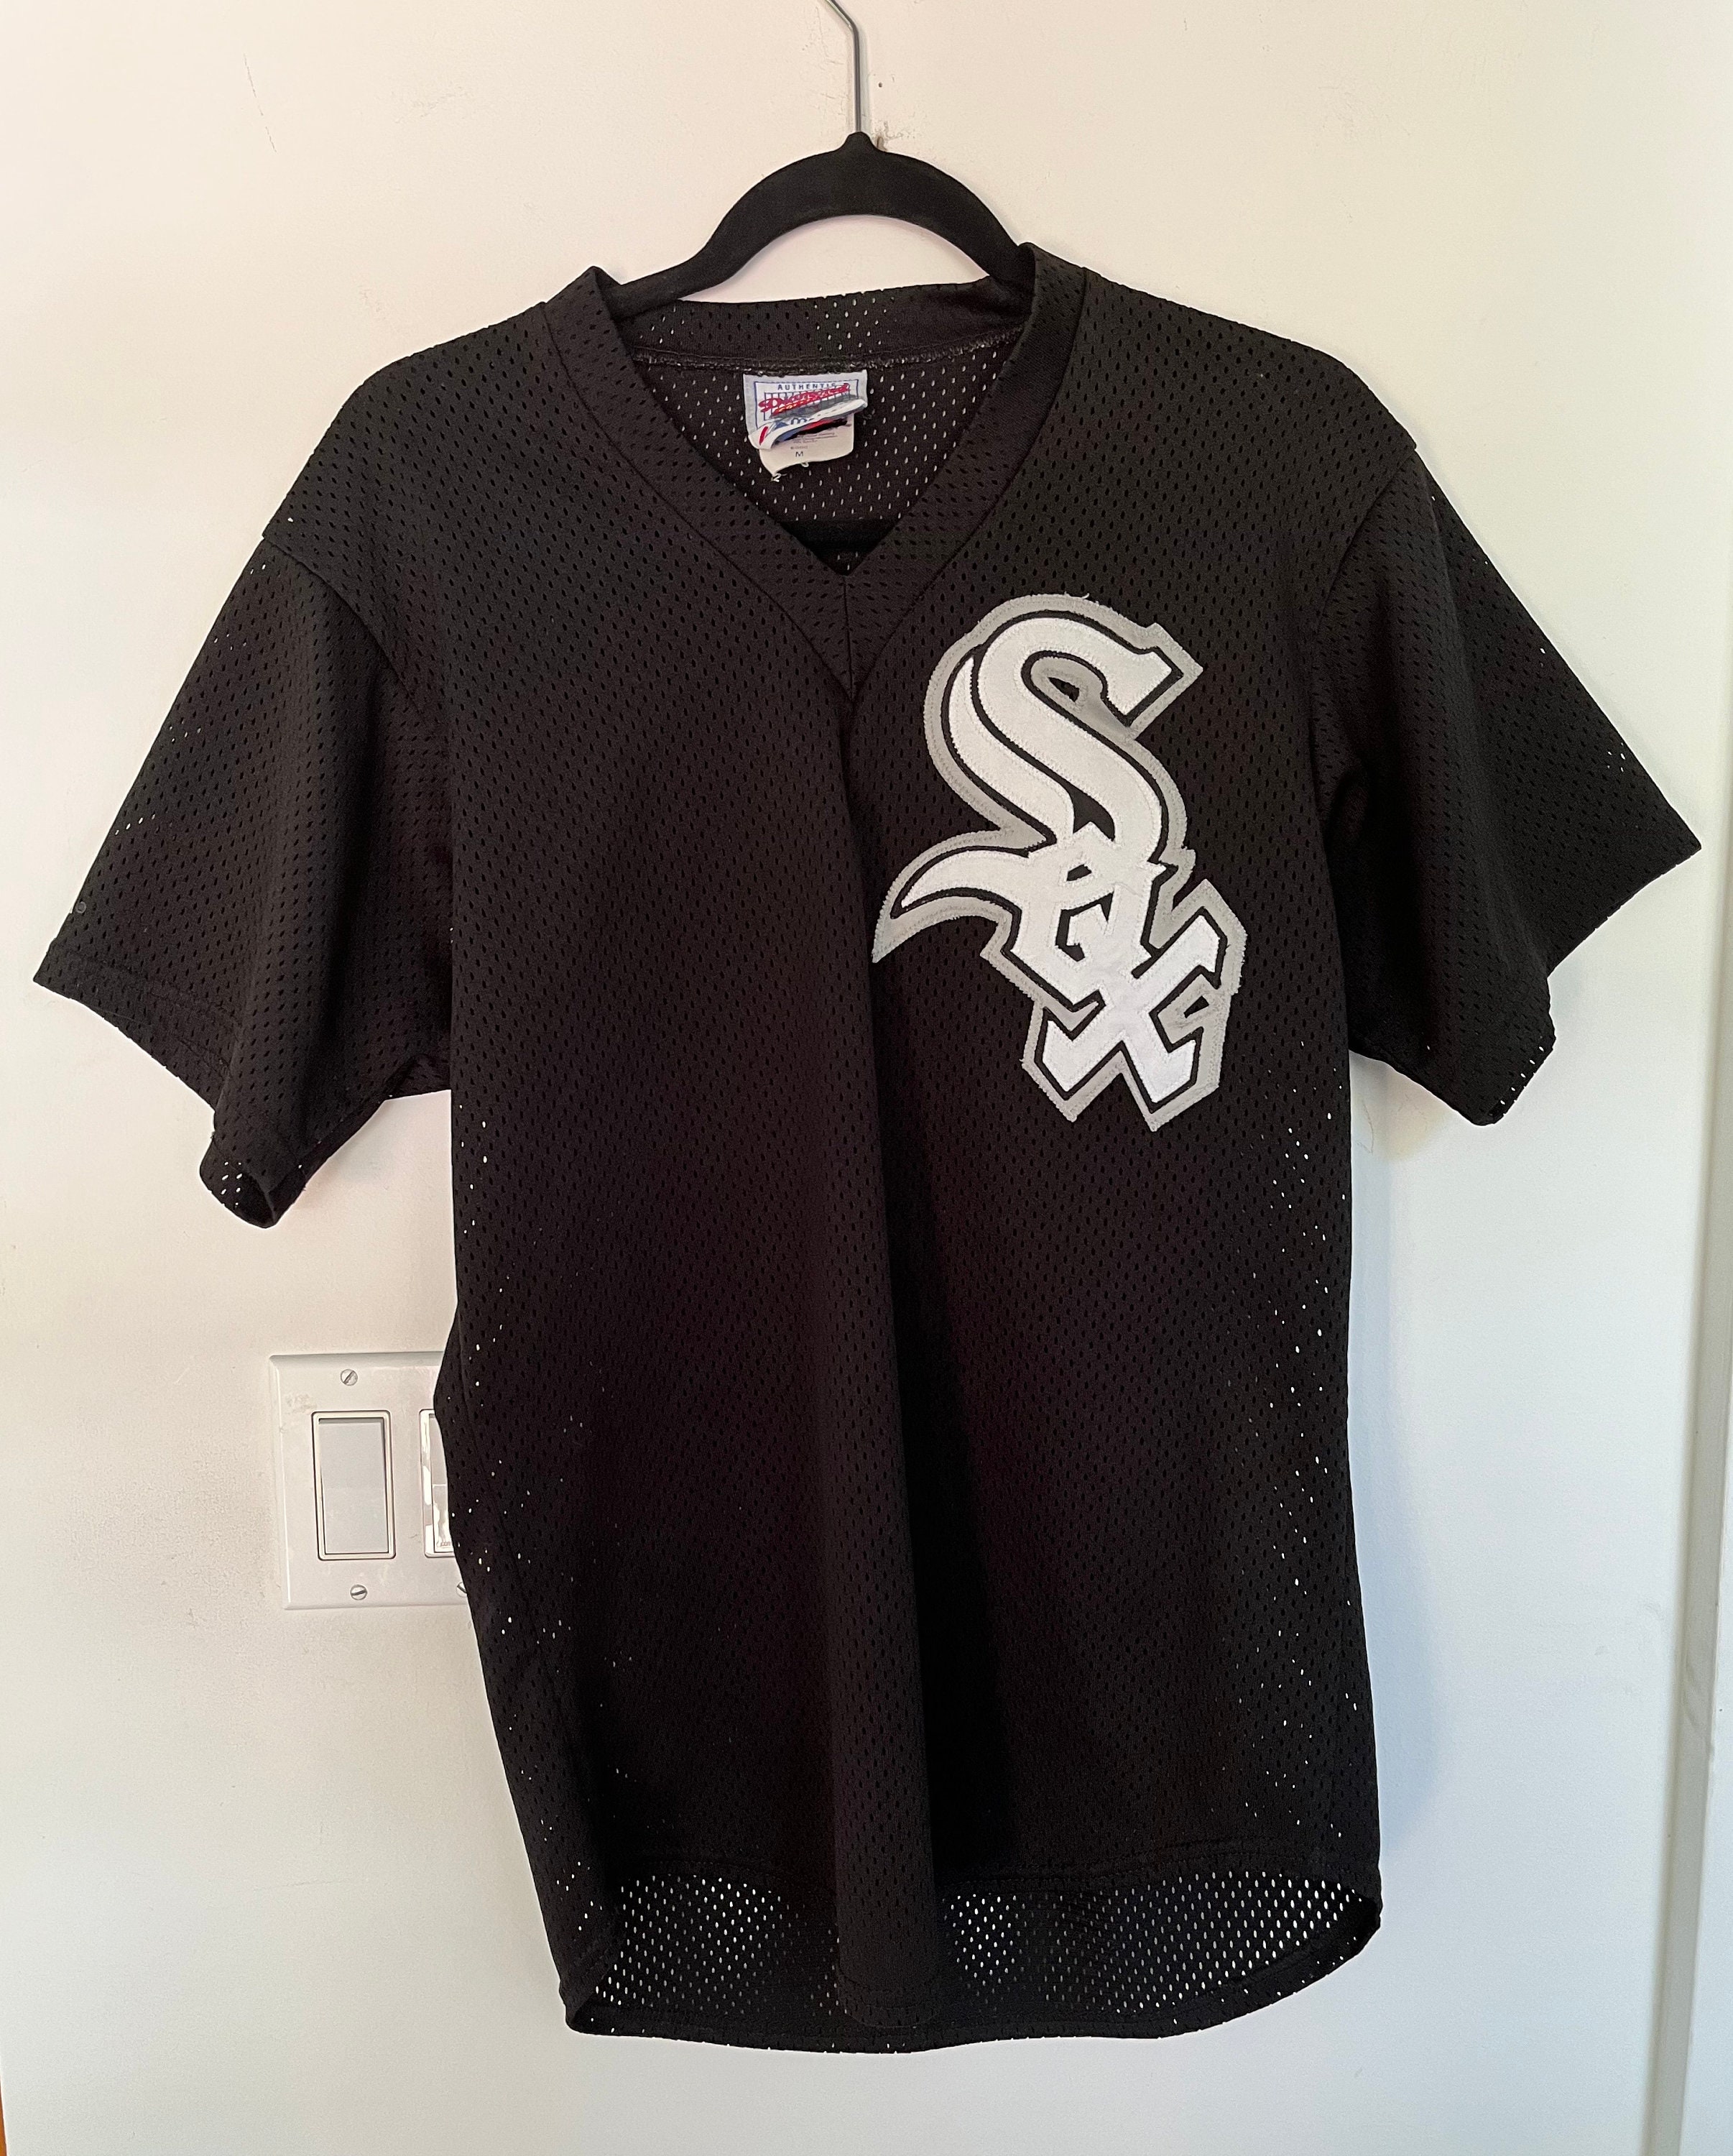 Vintage MLB (Long Gone) - Chicago White Sox 1917 World Series T-Shirt 1991  X-Large – Vintage Club Clothing